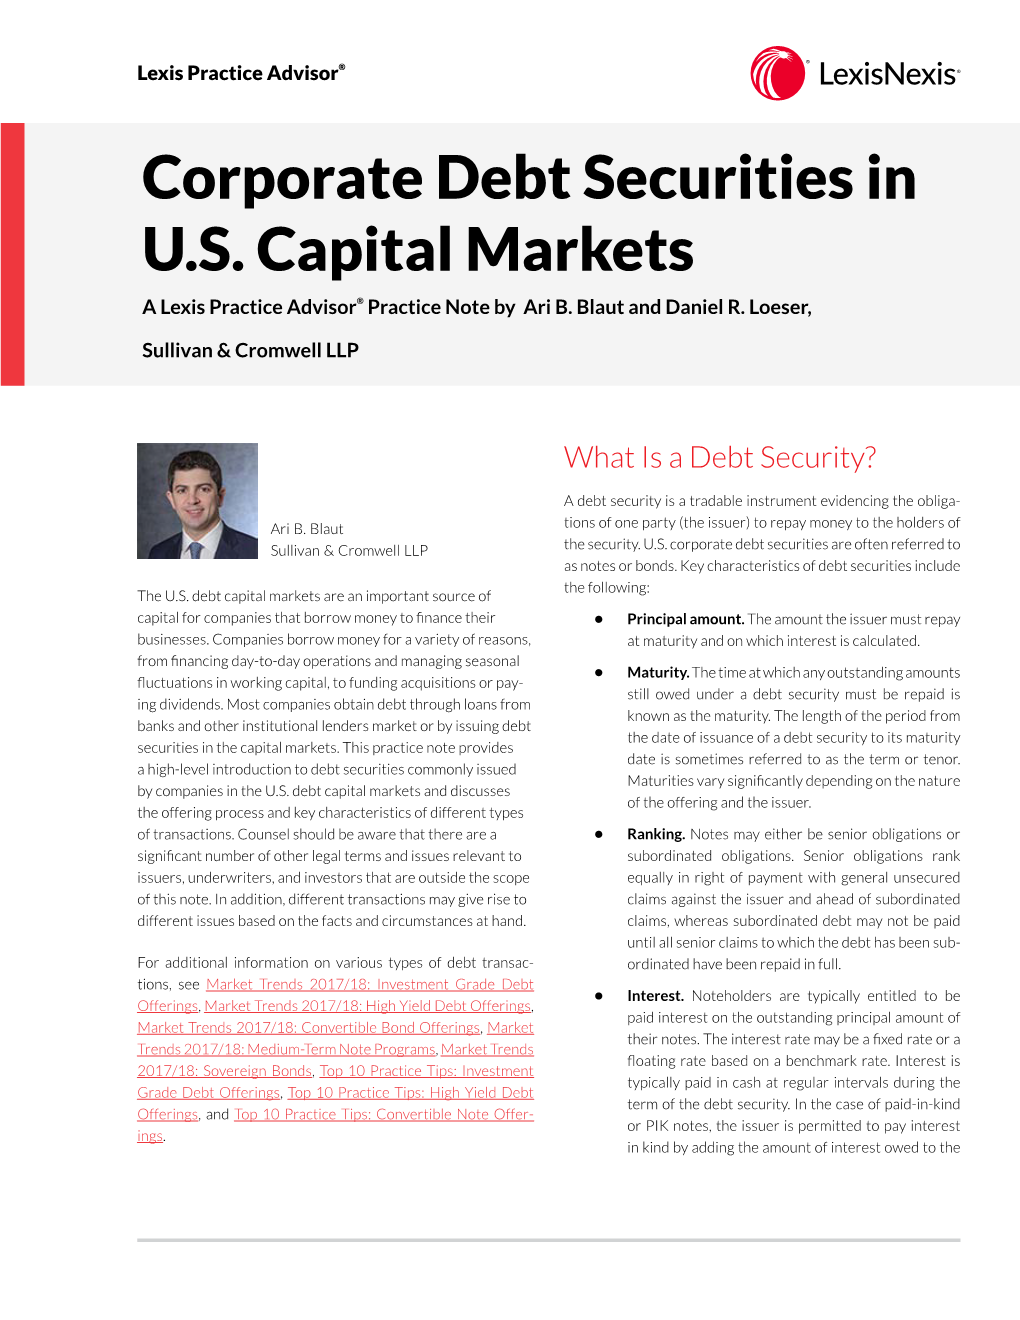 Corporate Debt Securities in U.S. Capital Markets a Lexis Practice Advisor® Practice Note by Ari B